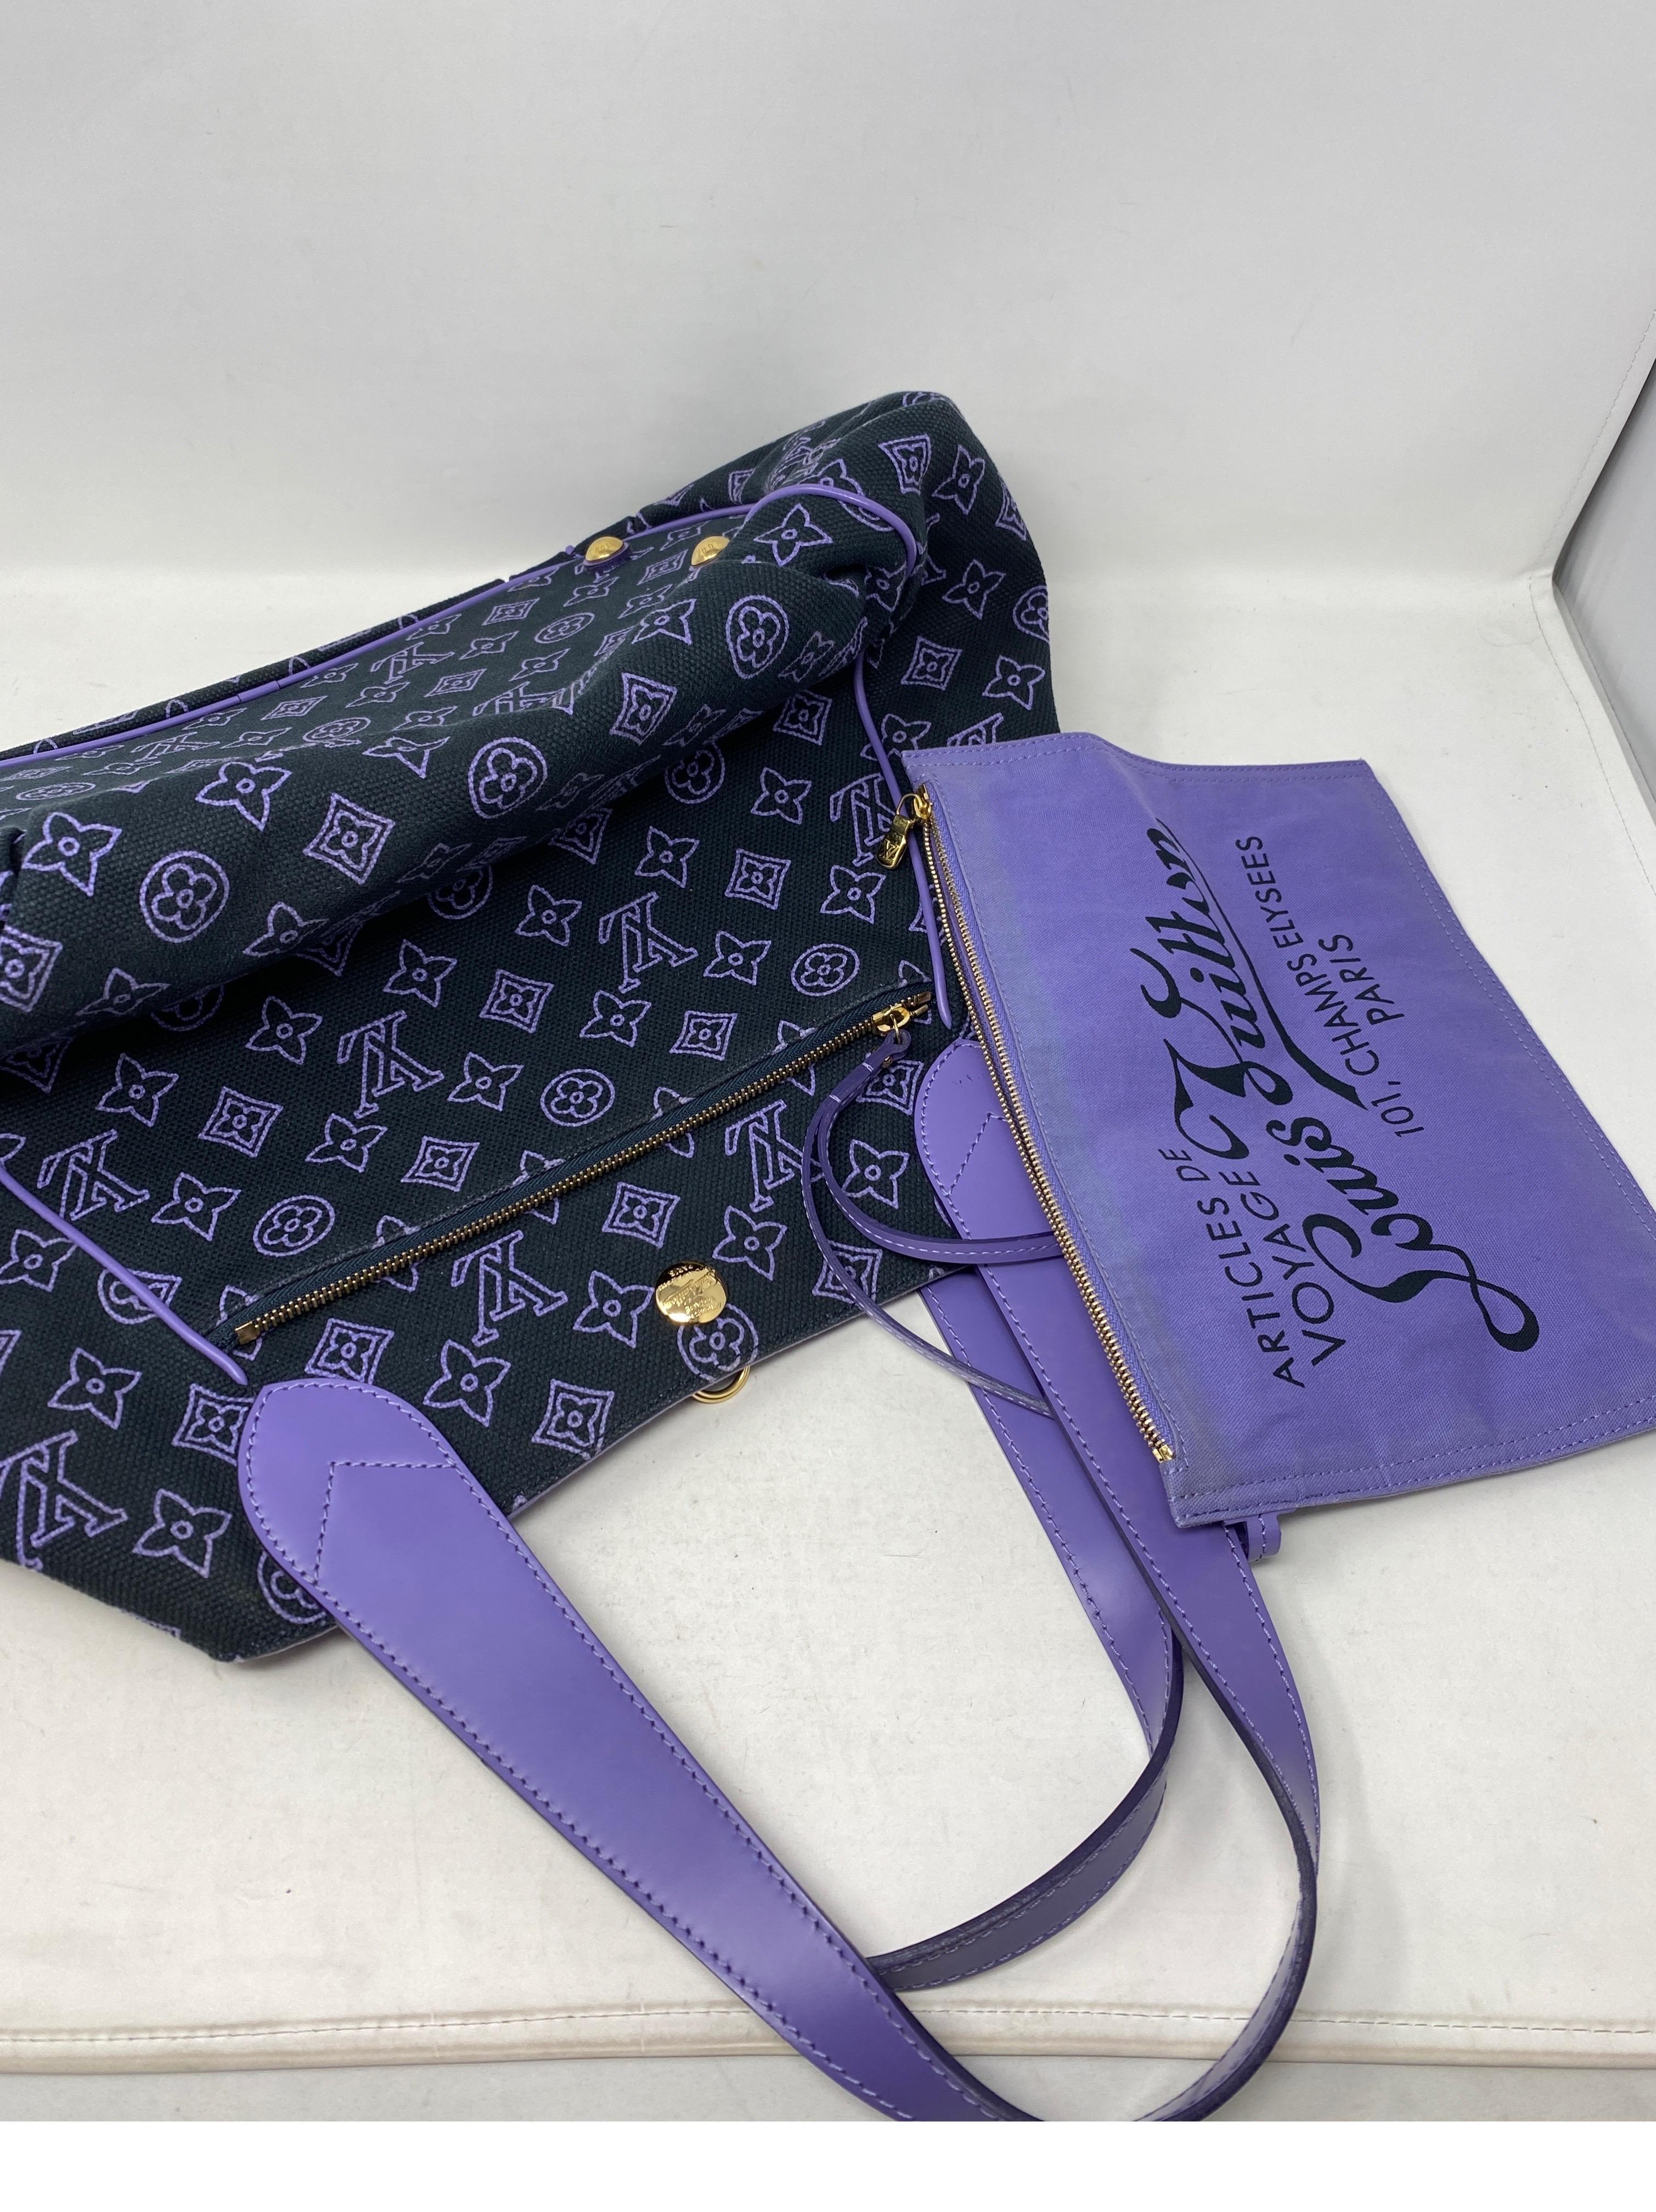 lv purple bag